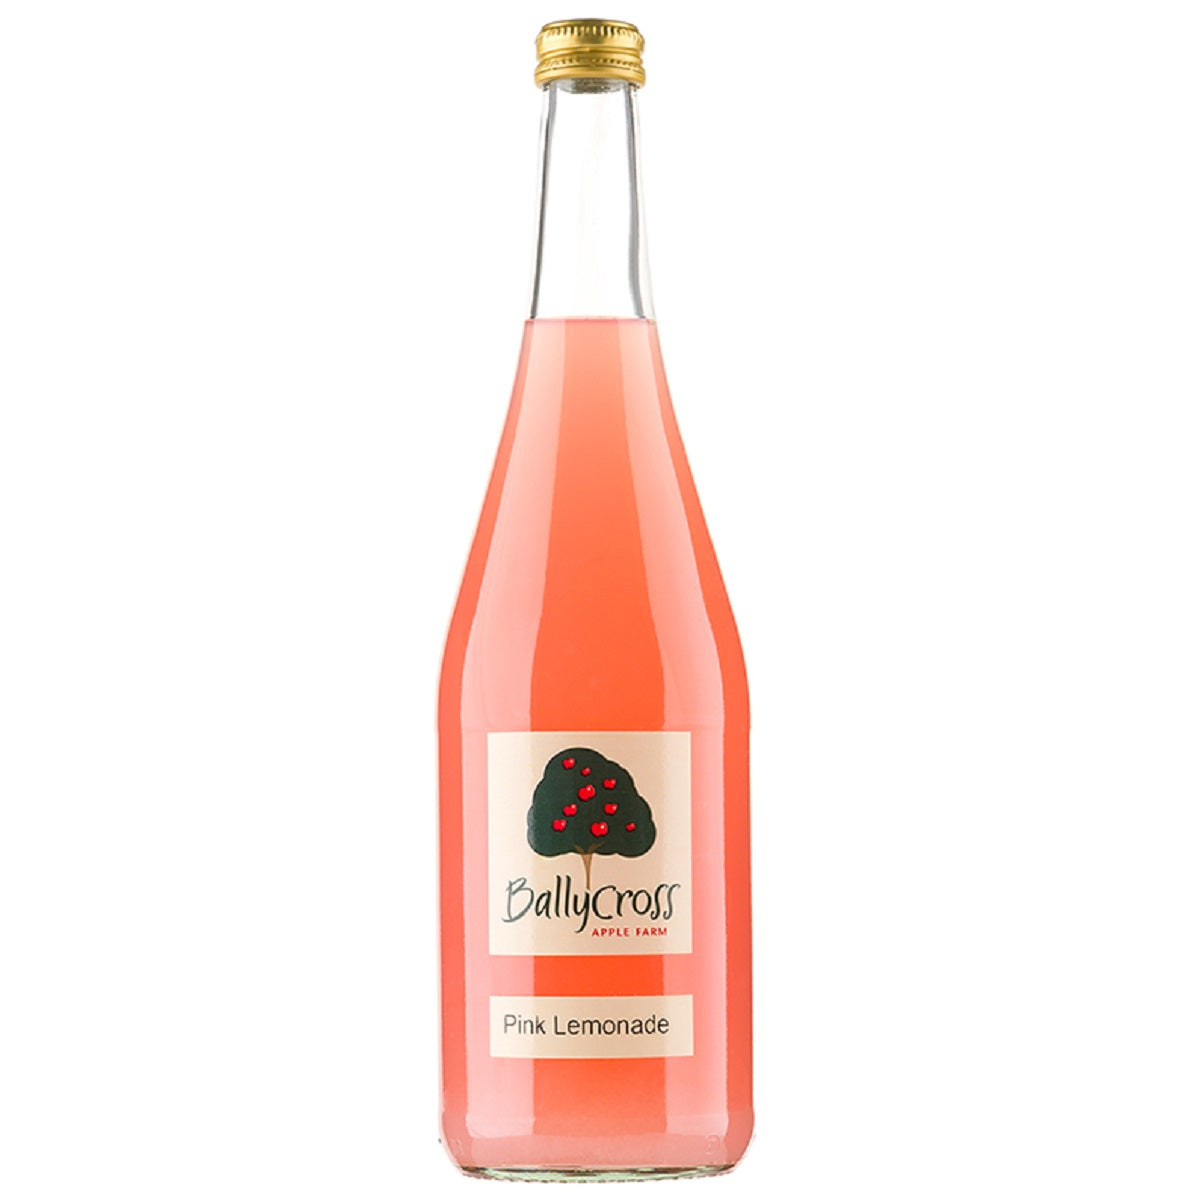 Ballycross Apple Farm Pink Lemonade 750ml